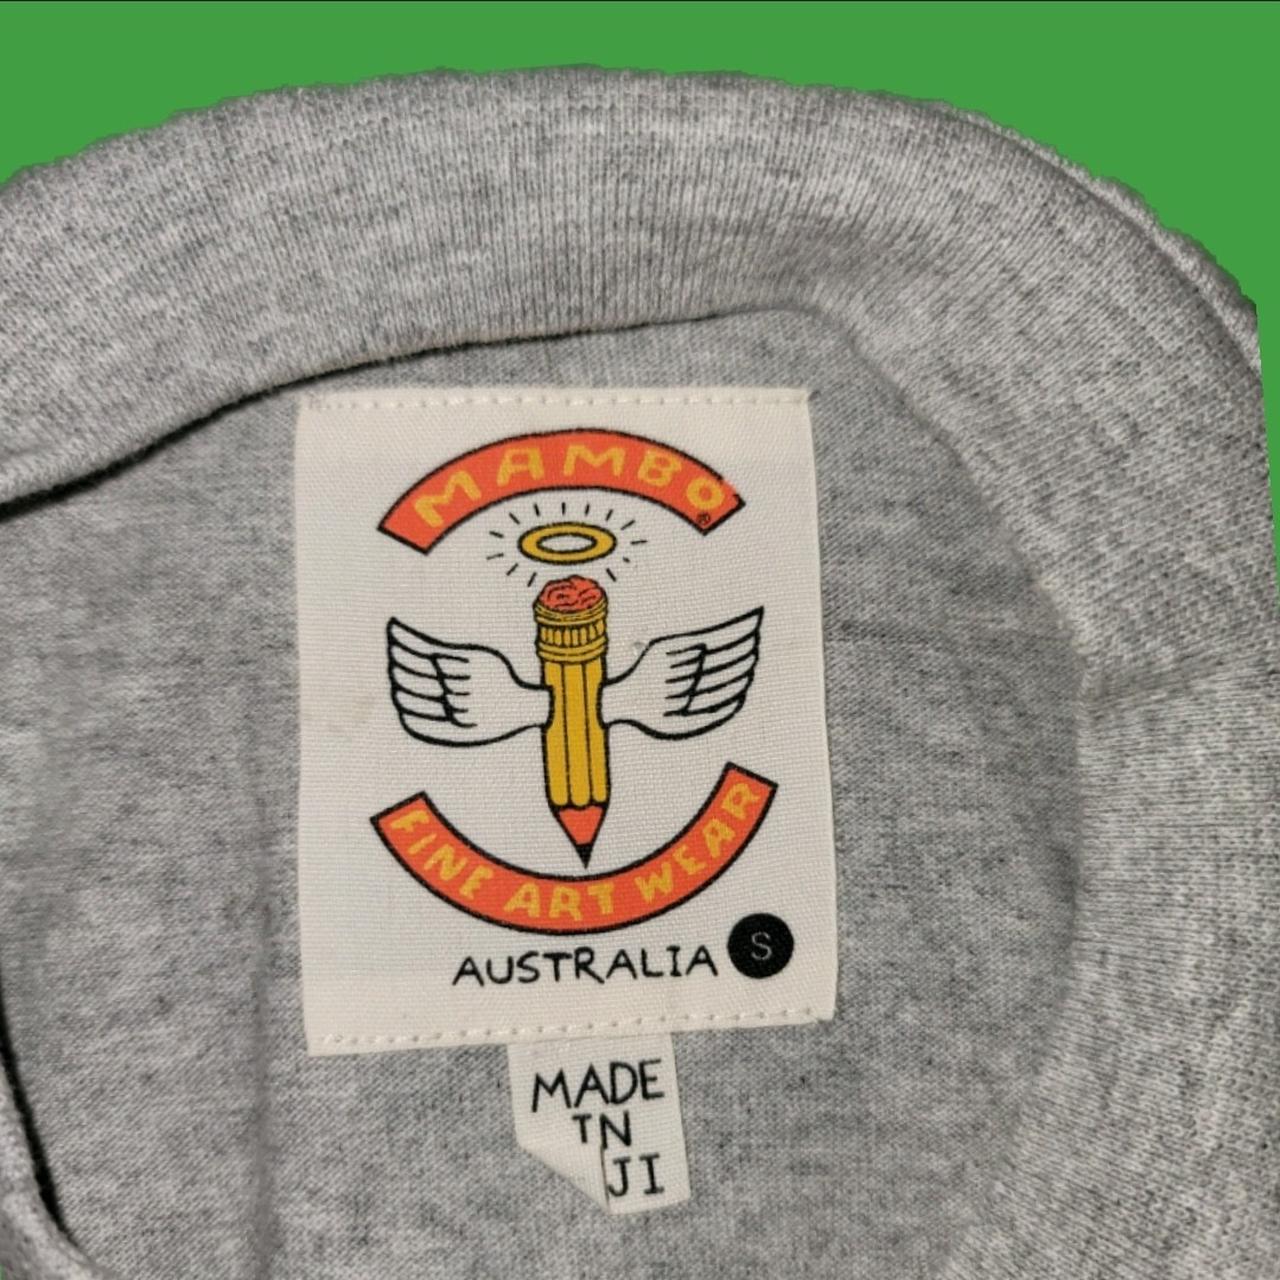 Product Image 4 - Vintage MAMBO Australian 1989 shirt!
Like